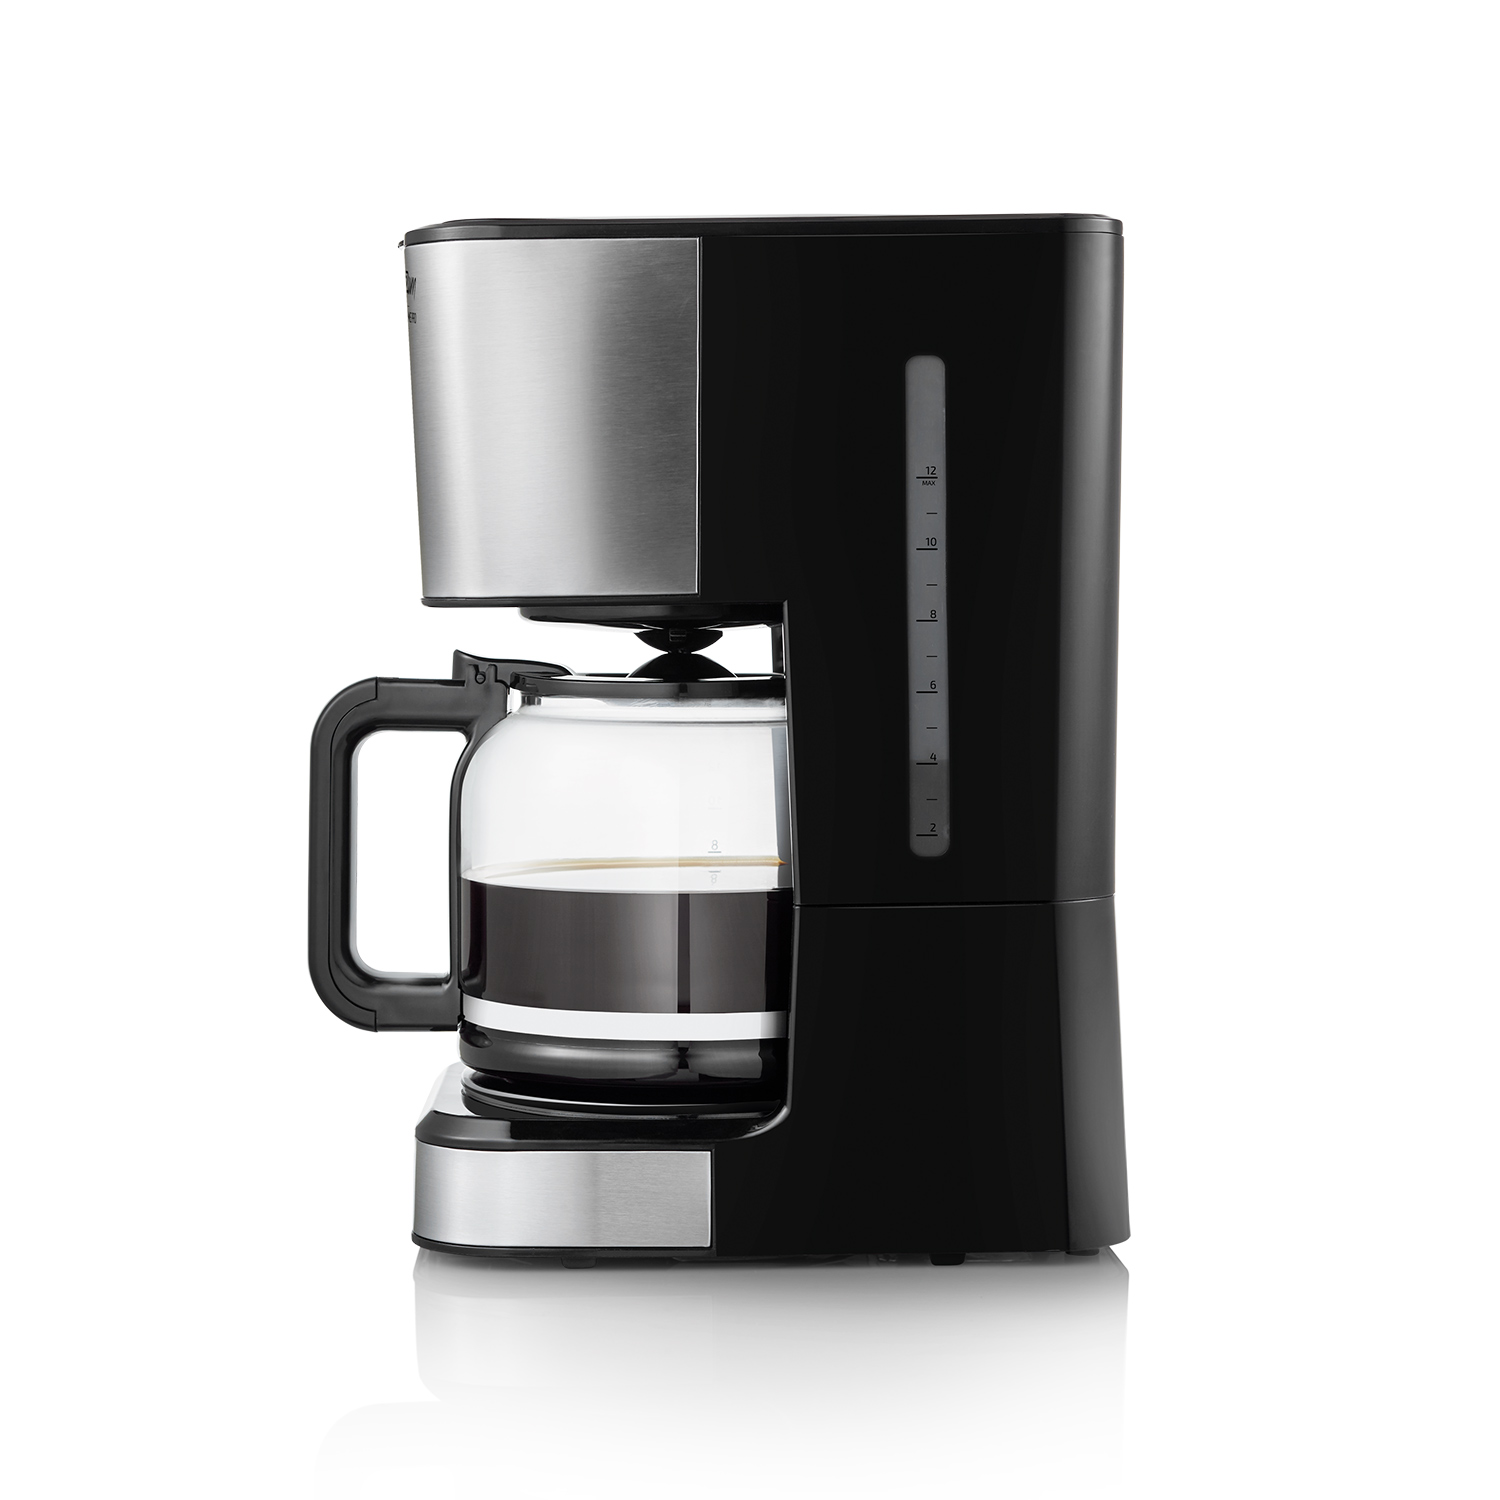 AR3073 Brewtime Pro Filter Coffee Machine - Black - 3